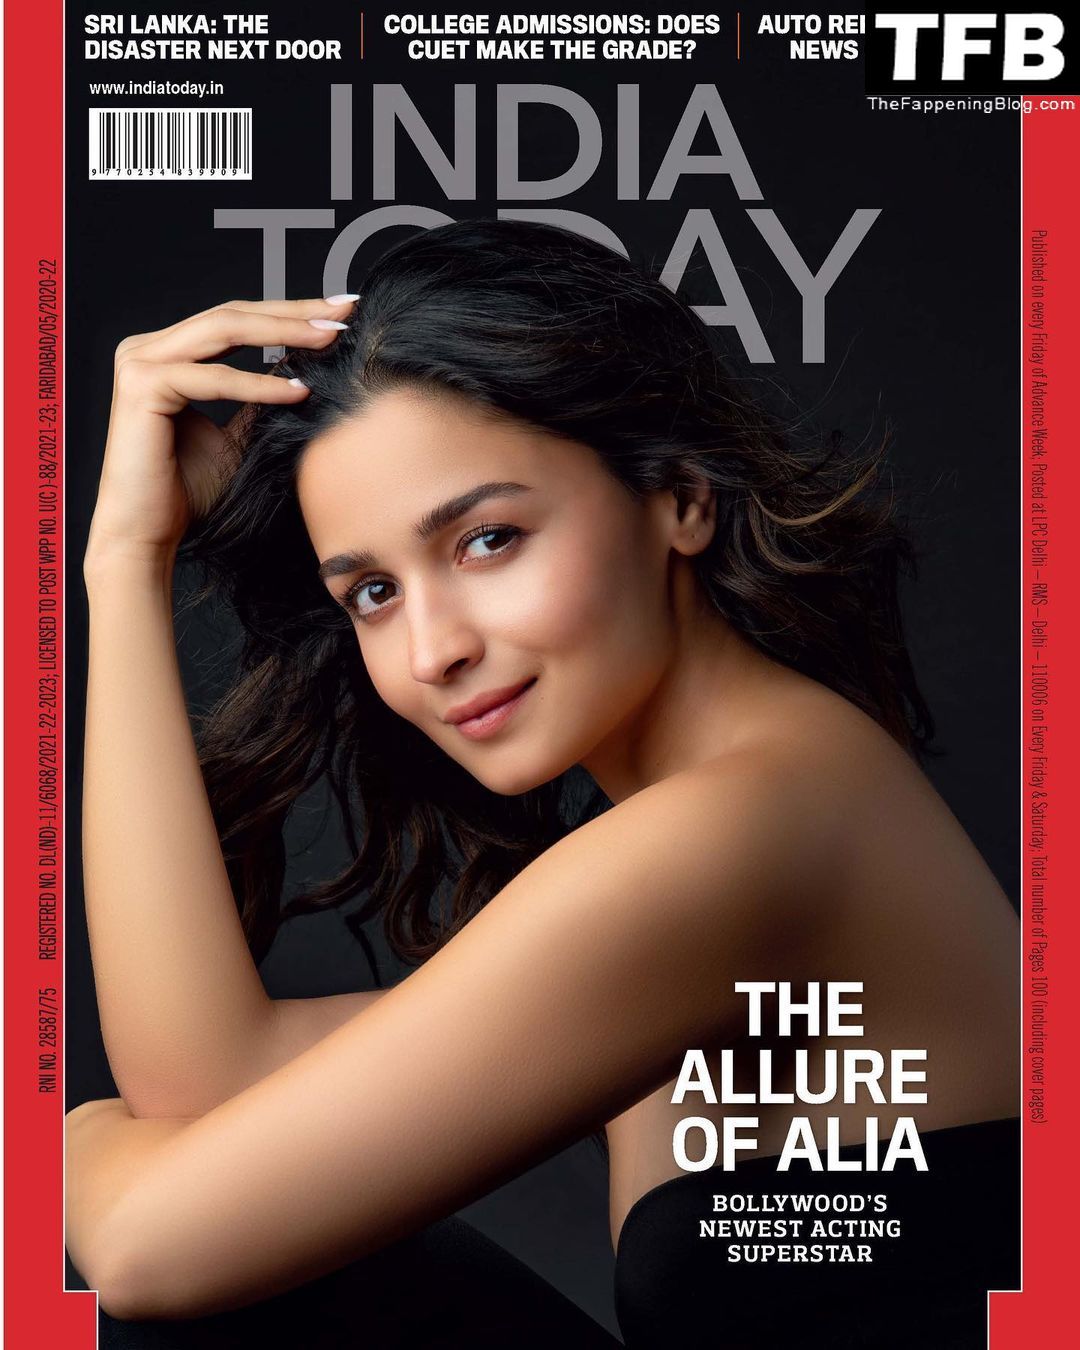 Alia-Bhatt-Sexy-The-Fappening-Blog-1.jpg